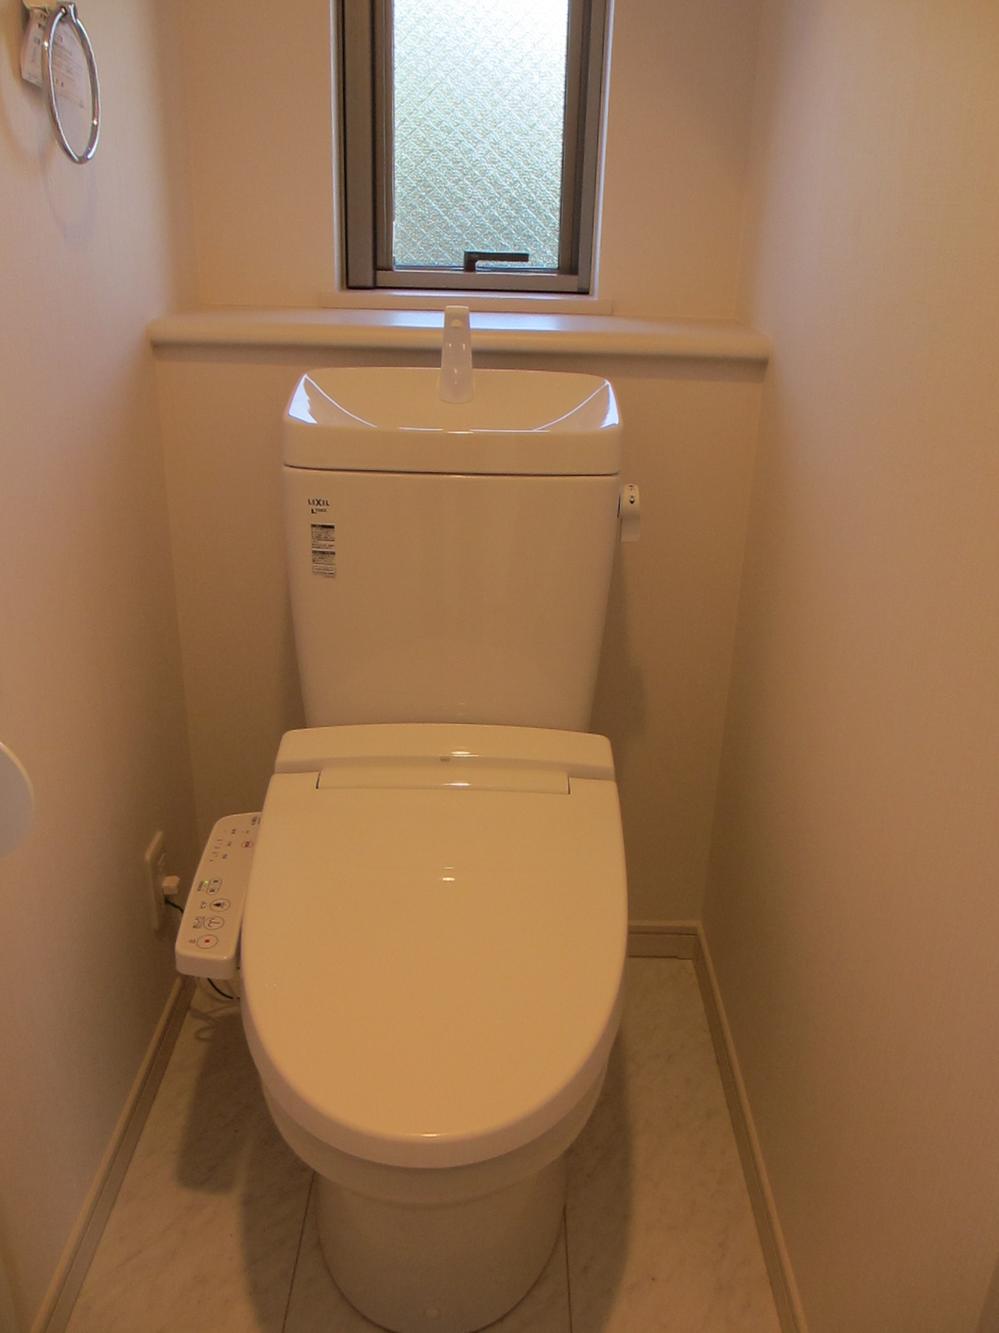 Building plan example (introspection photo). Building plan example toilet